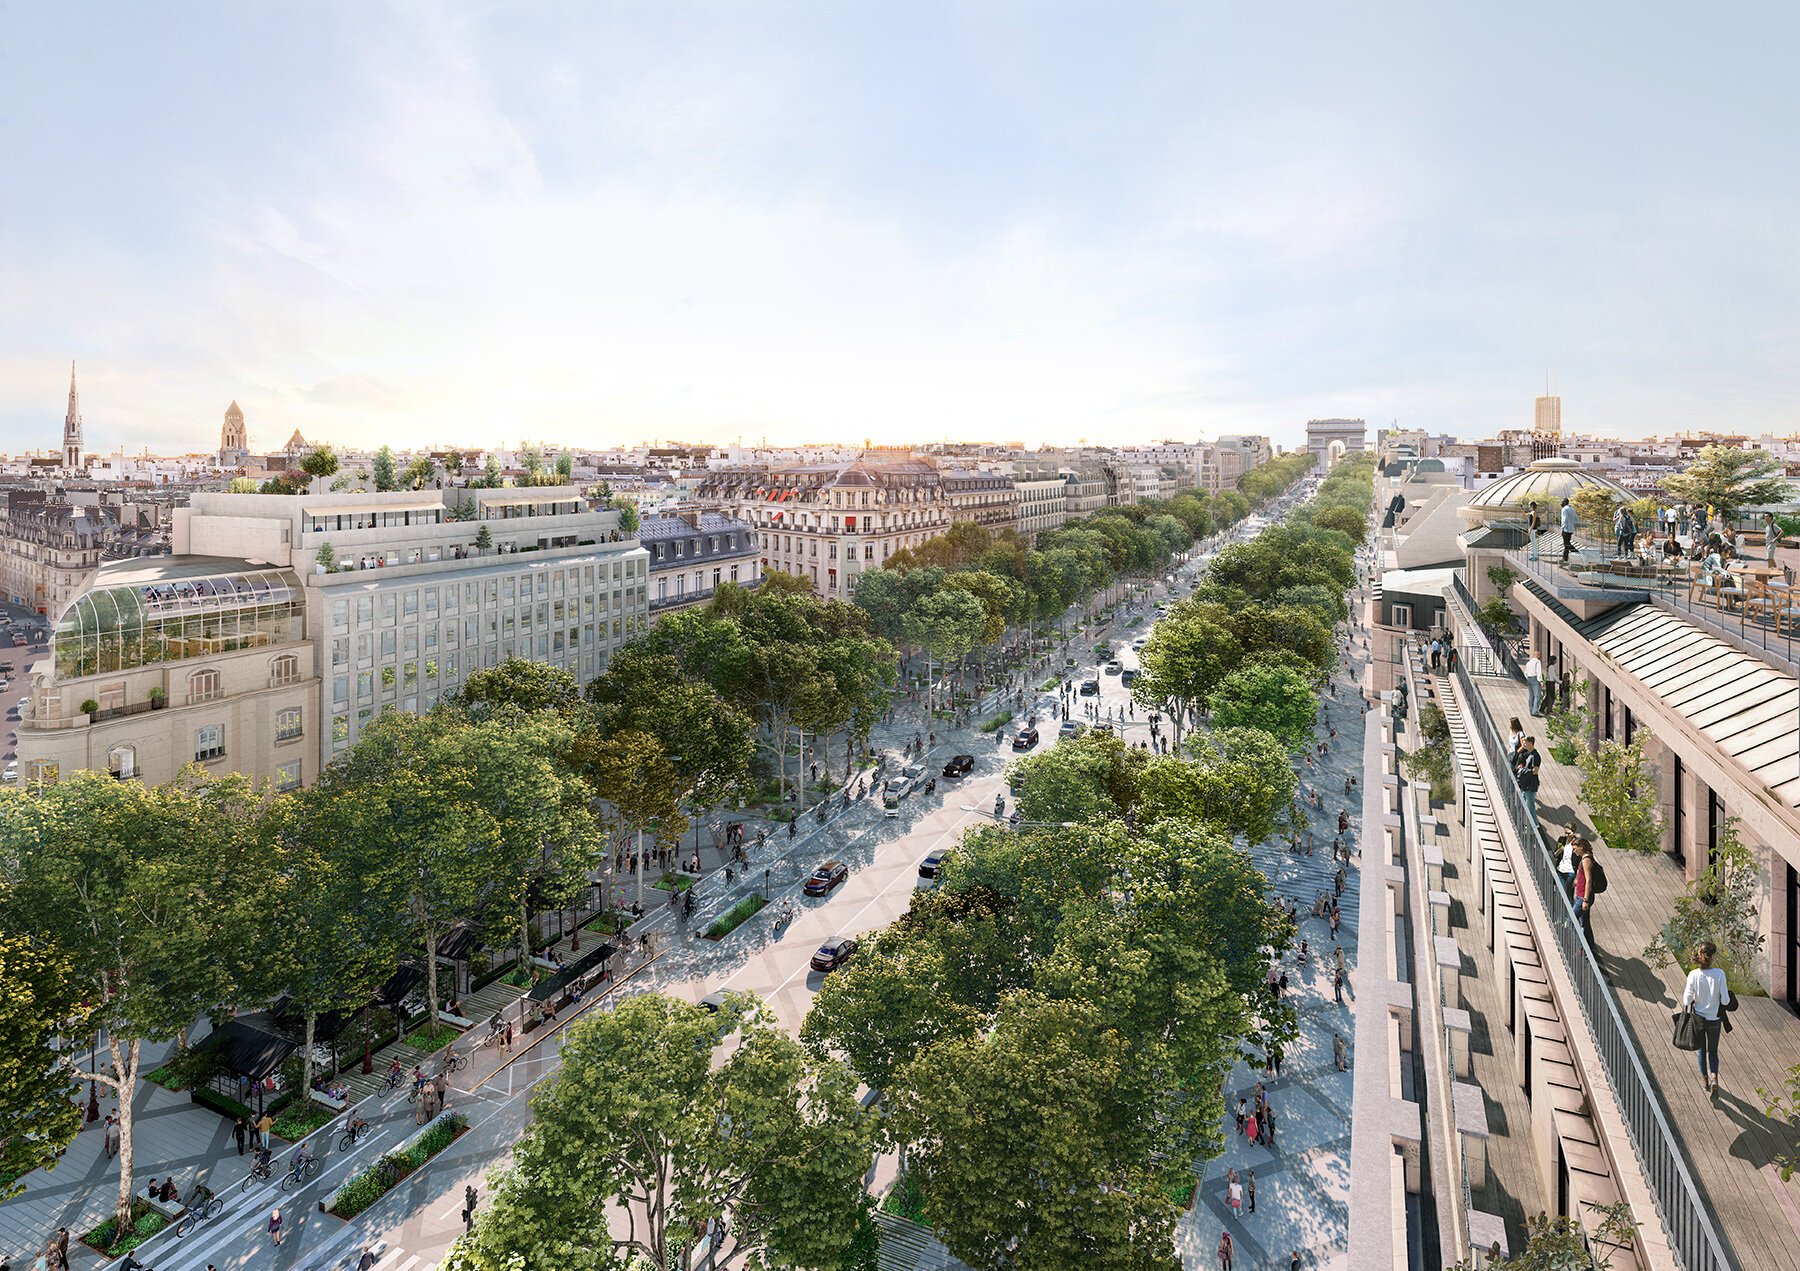 Champs-Elysées: The Parisian Promenade